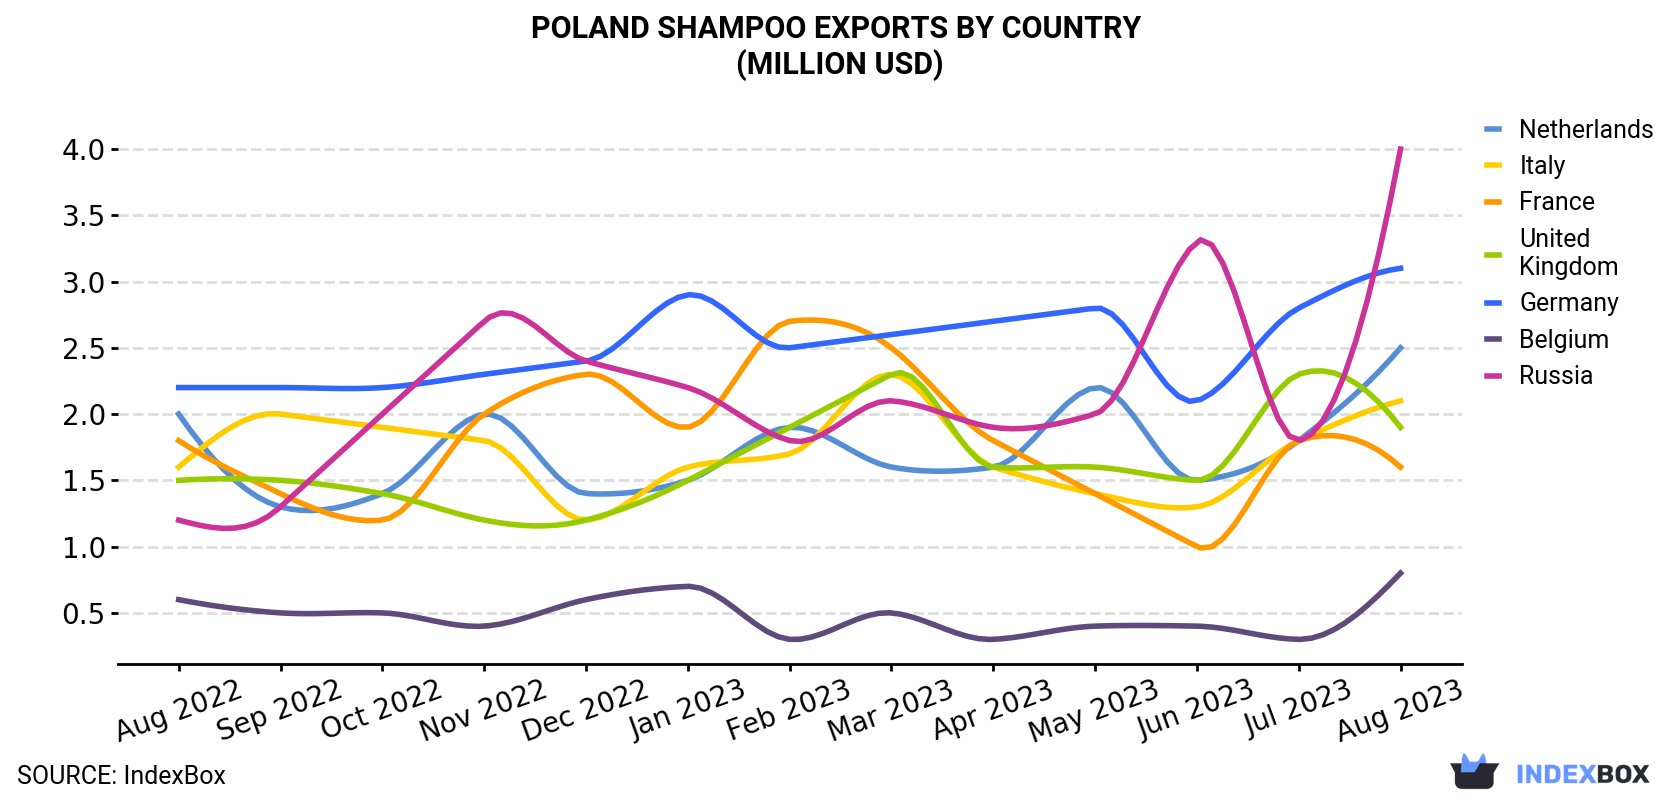 Poland Shampoo Exports By Country (Million USD)